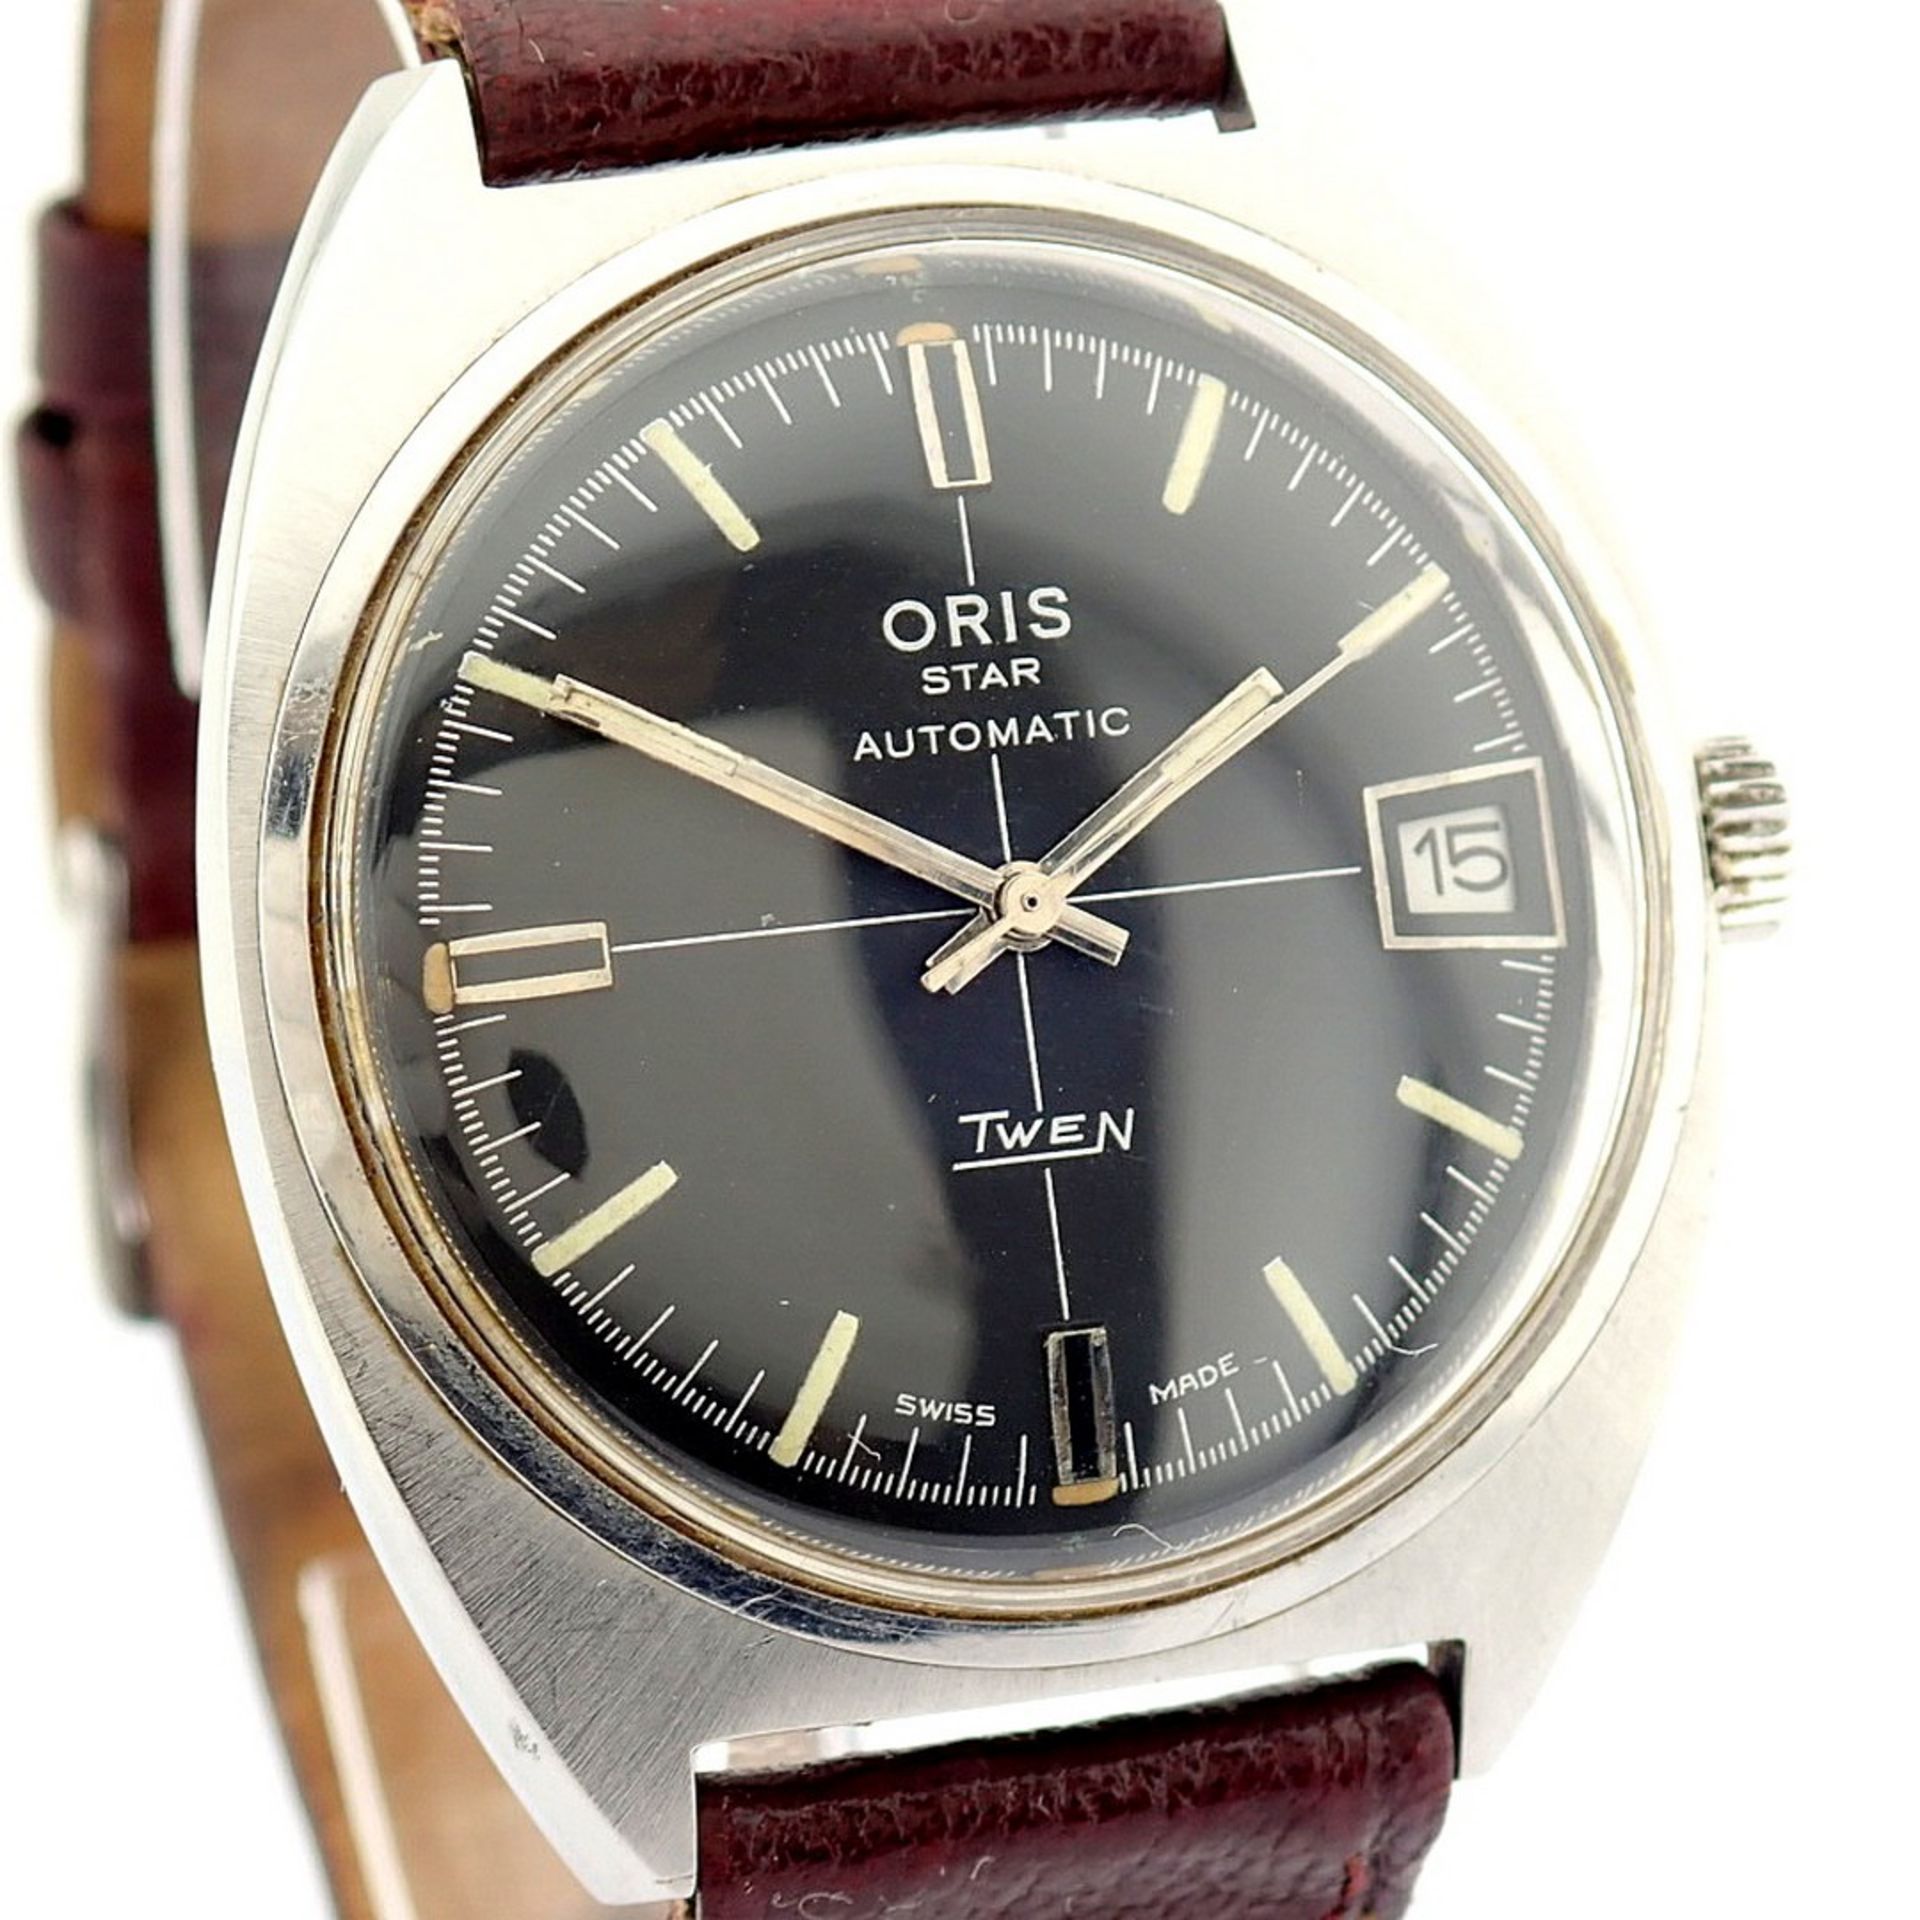 Oris / Oris Star Automatic Twen - Gentlemen's Steel Wrist Watch - Image 3 of 10